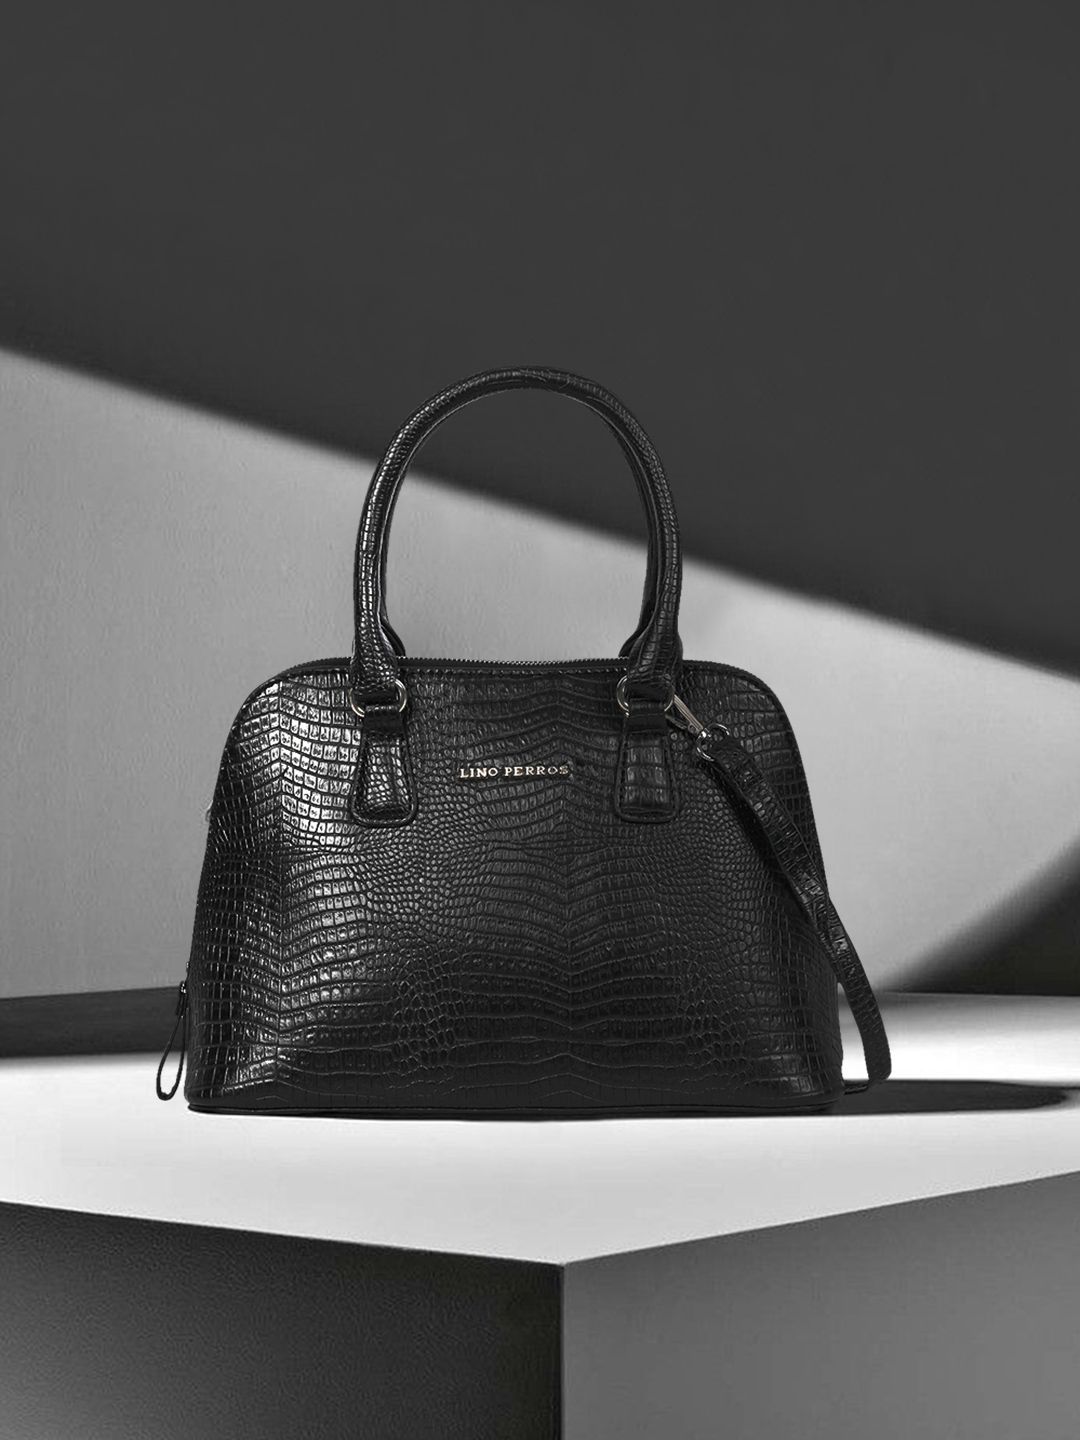 Lino Perros Black Snakeskin Textured Structured Handheld Bag Price in India